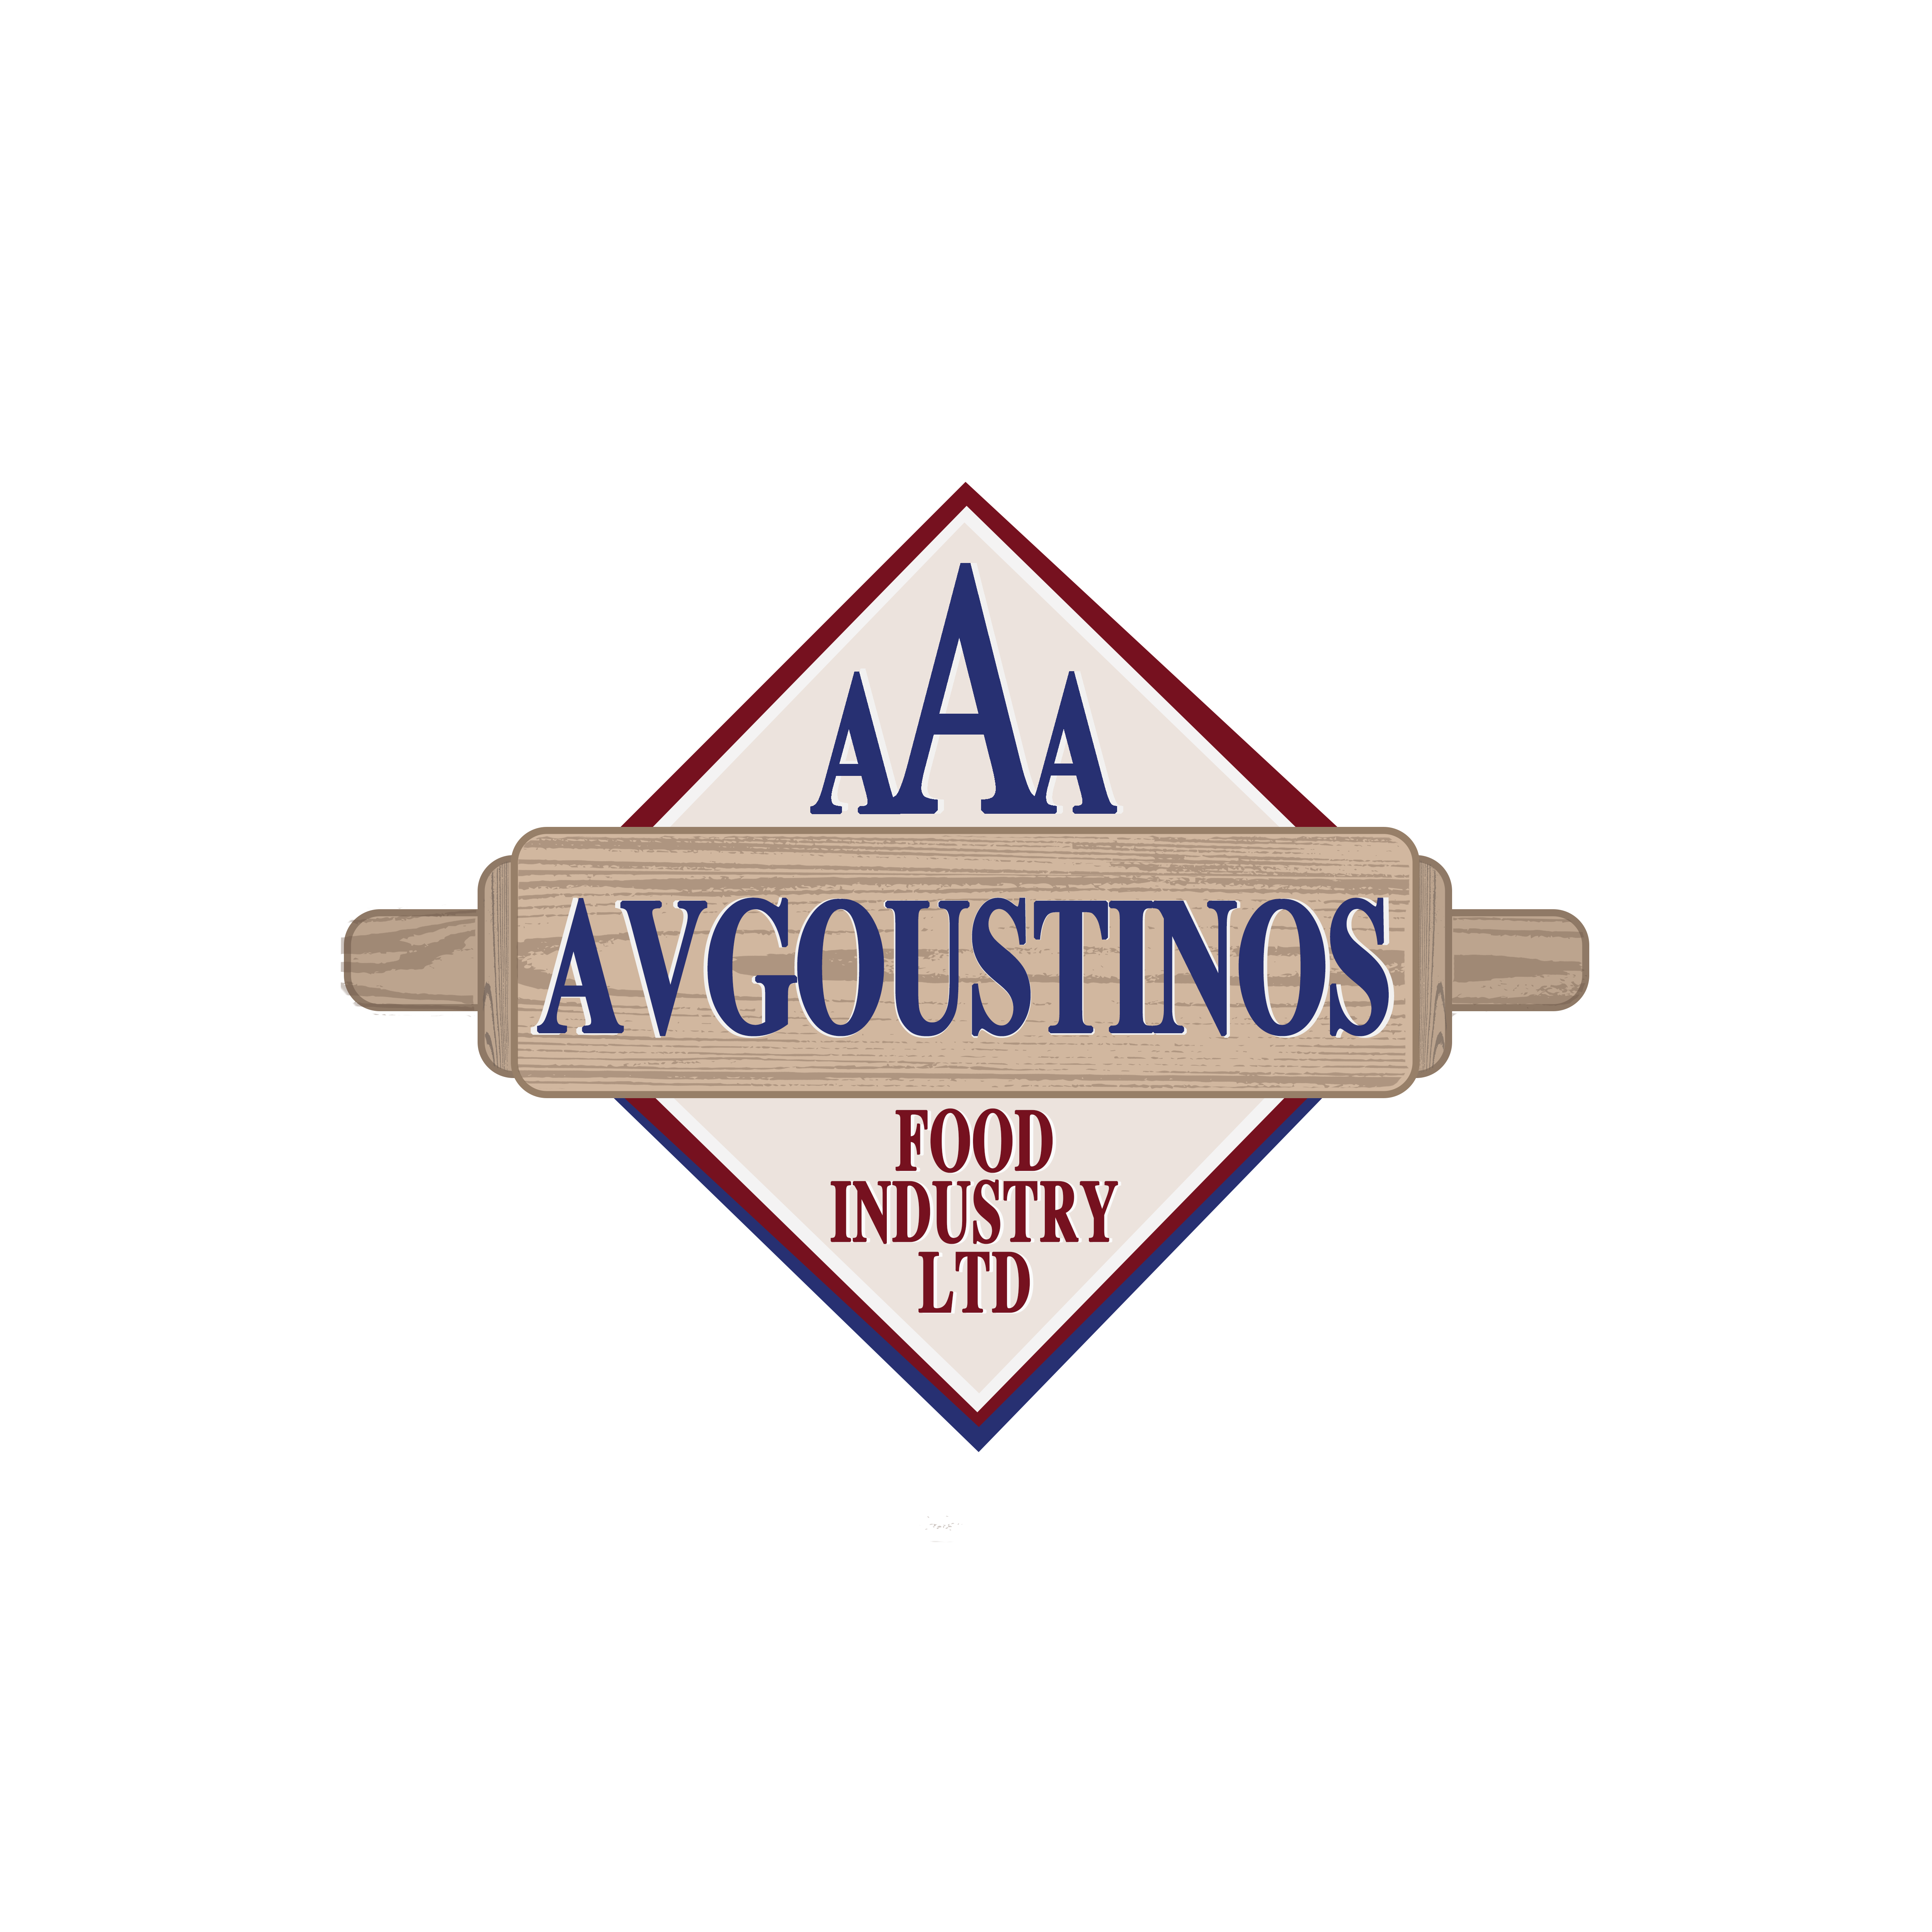 Avgoustinos Food Industry Ltd